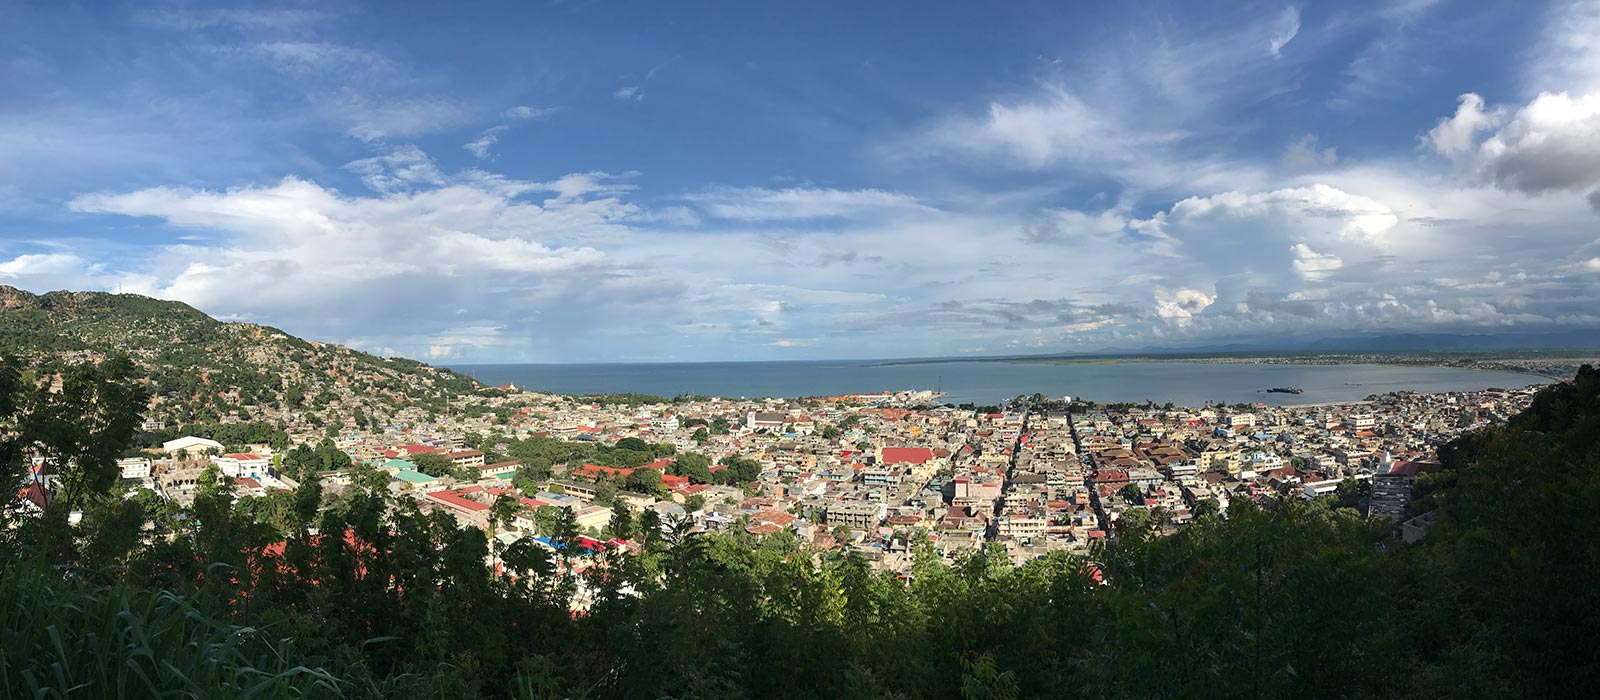 Residential area in Haiti. Haiti & Dominican Republic, an Island of two halves